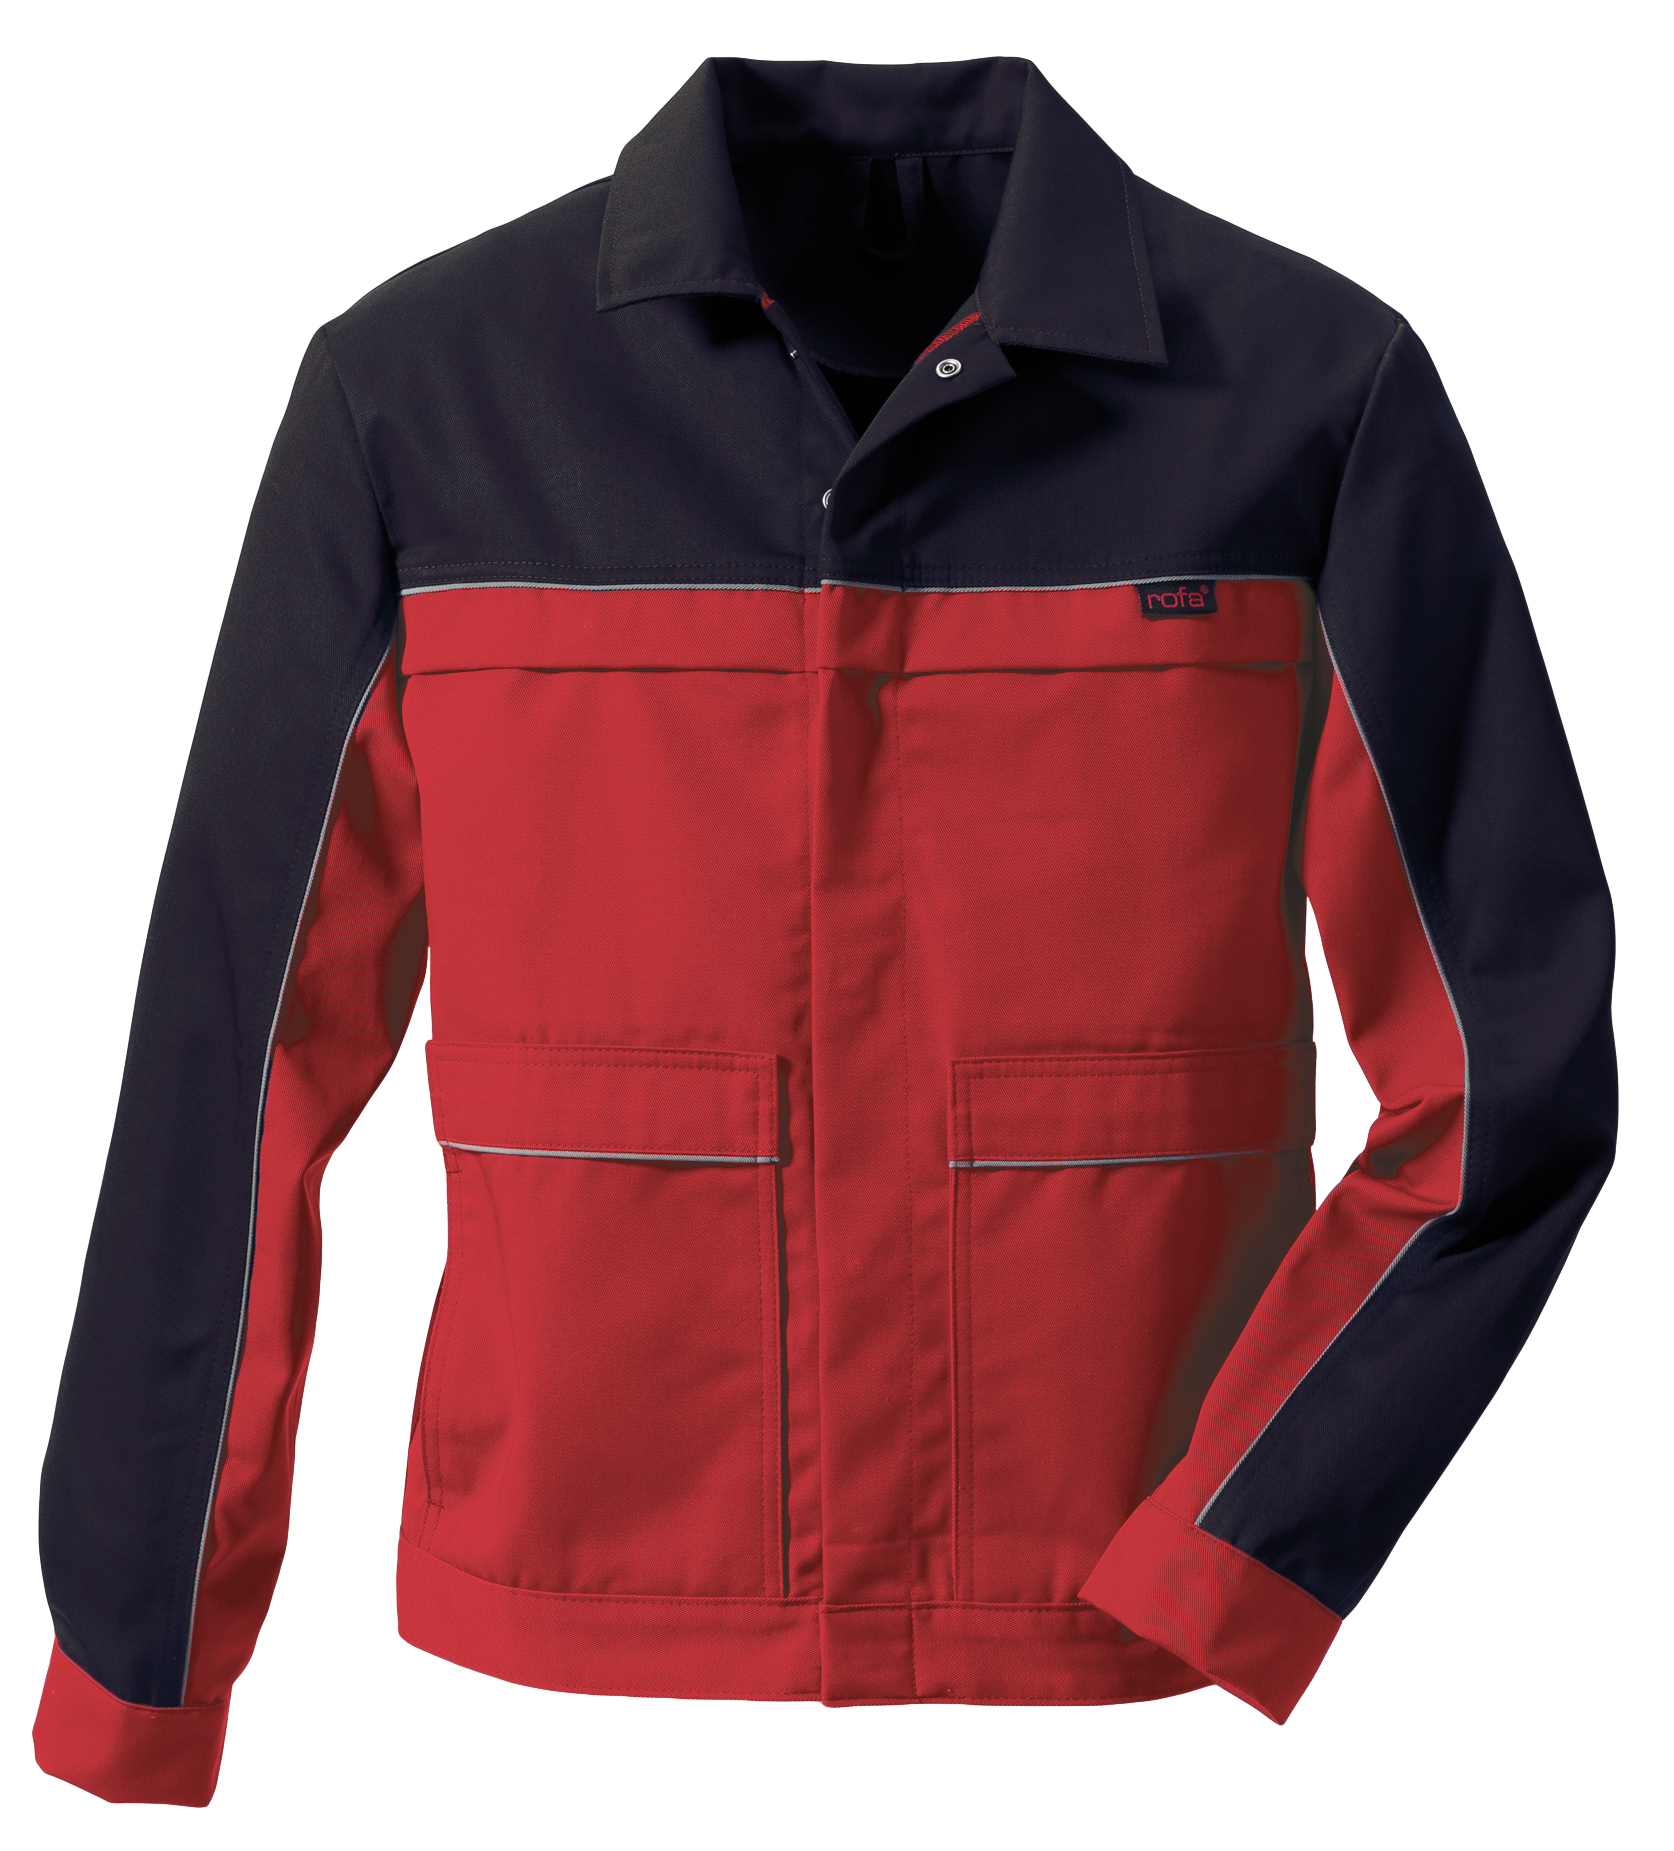 ROFA Bundjacke Arbeitsjacke Berufsjacke Schutzjacke Arbeitskleidung Berufskleidung rot marine